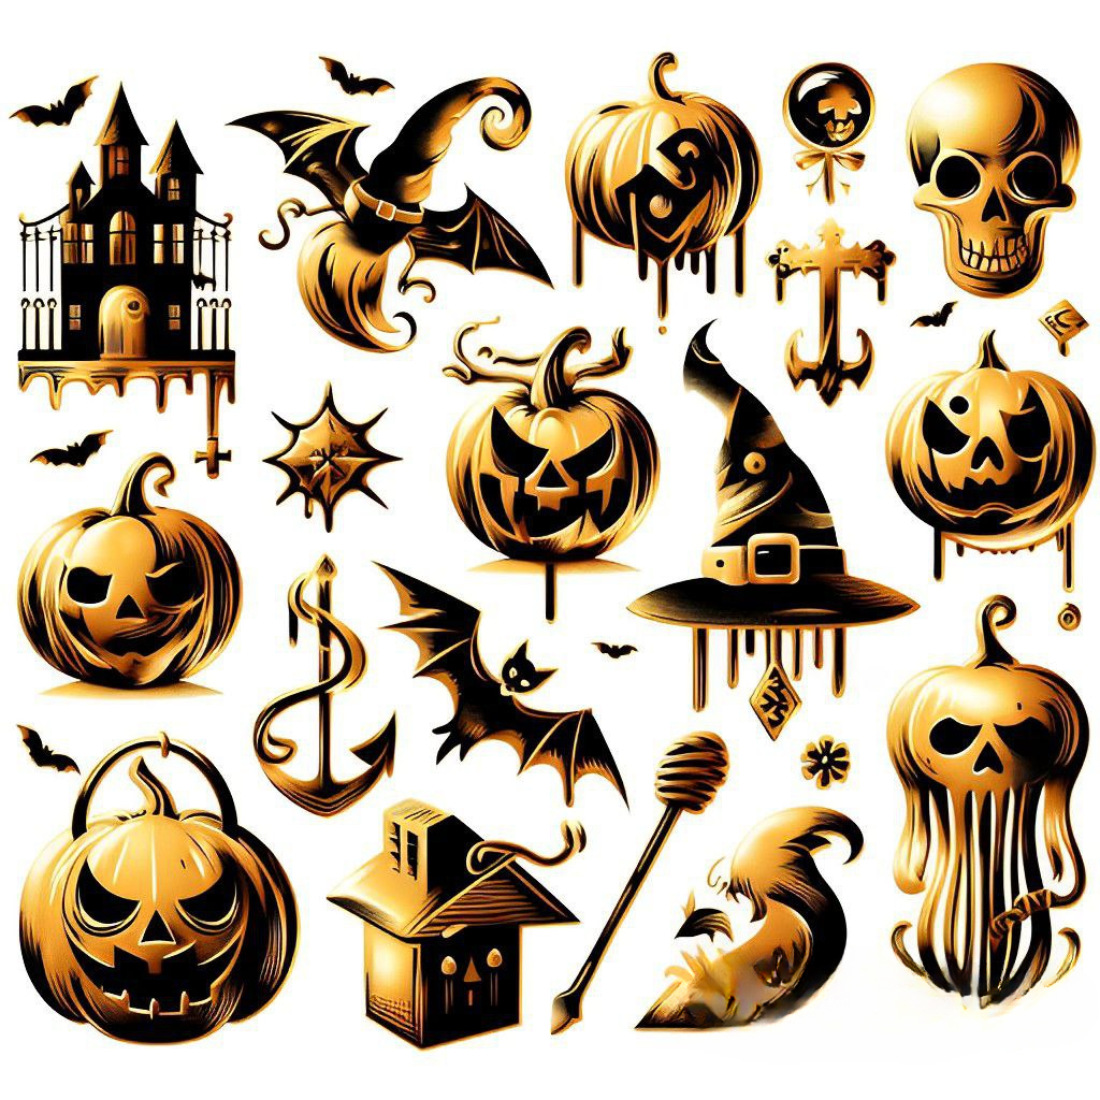 Halloween festival design preview image.